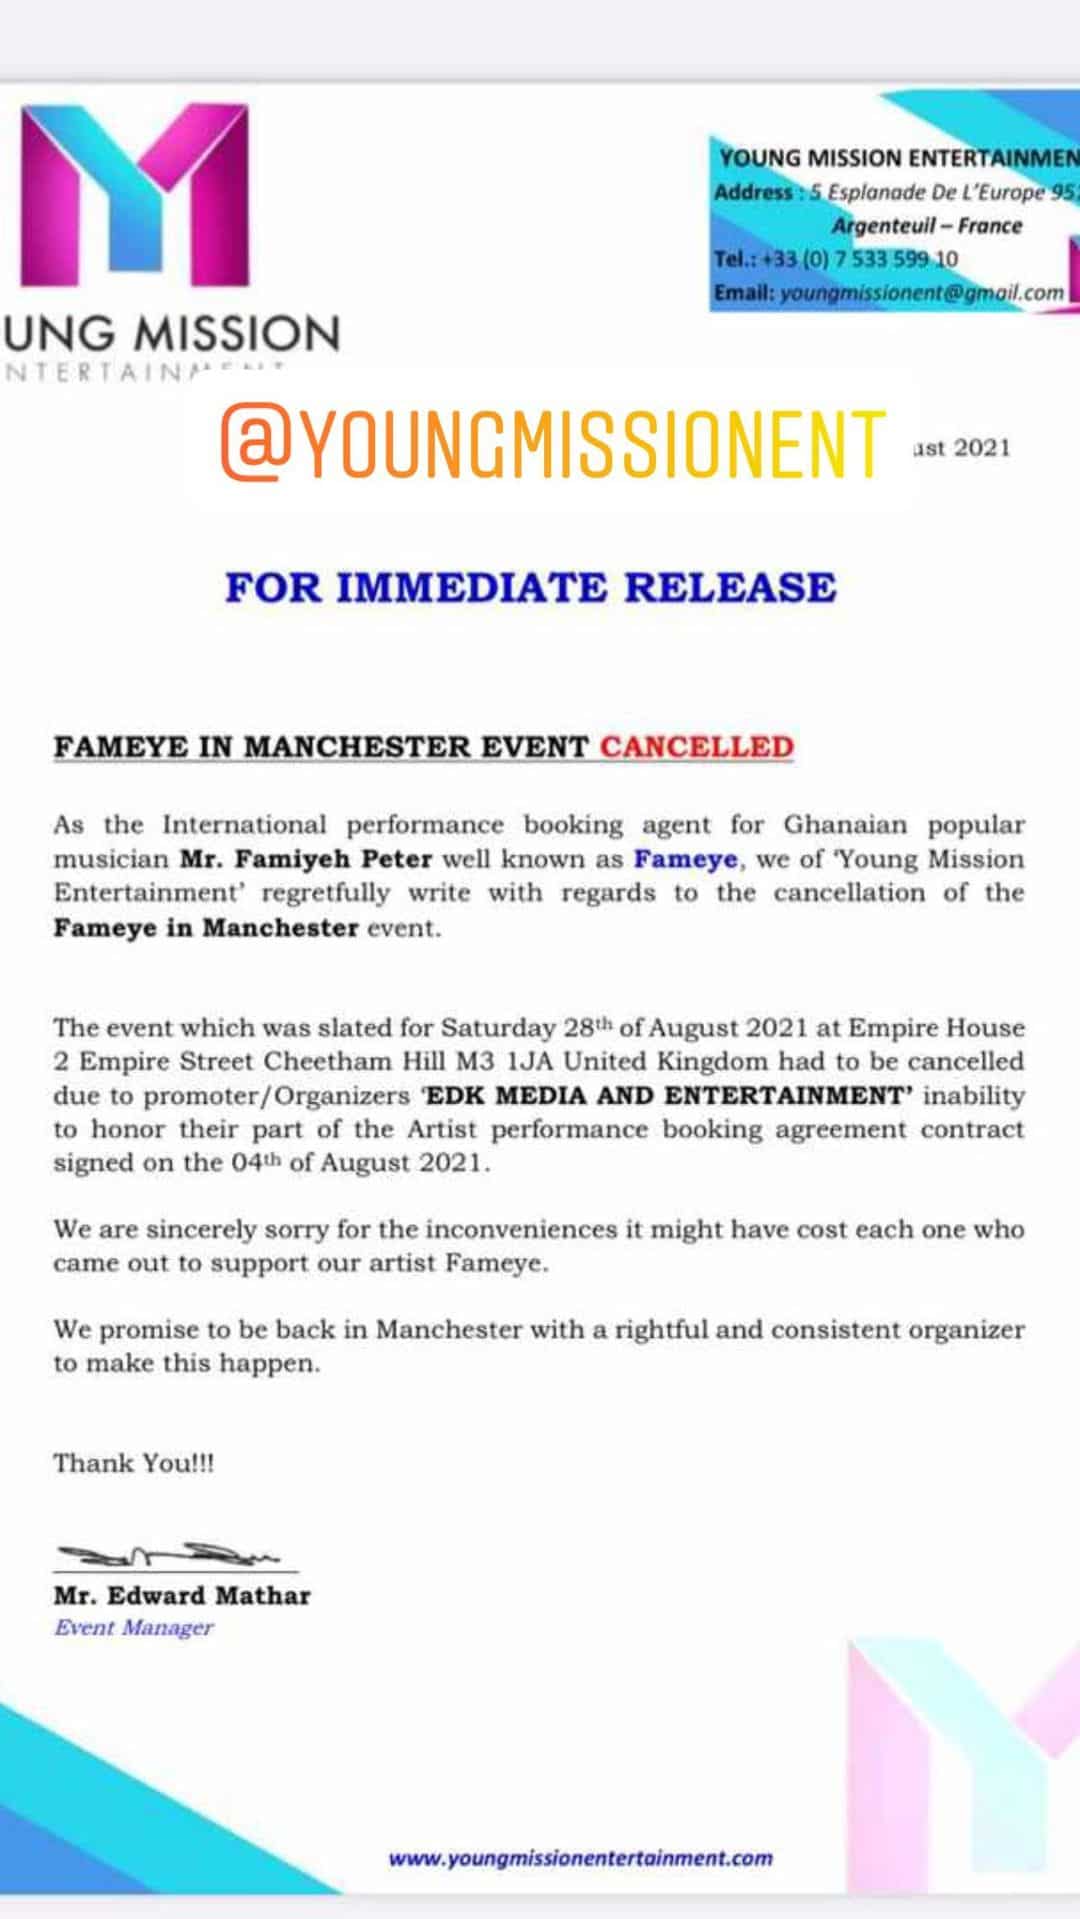 Fameye’s Manchester Concert Cancelled